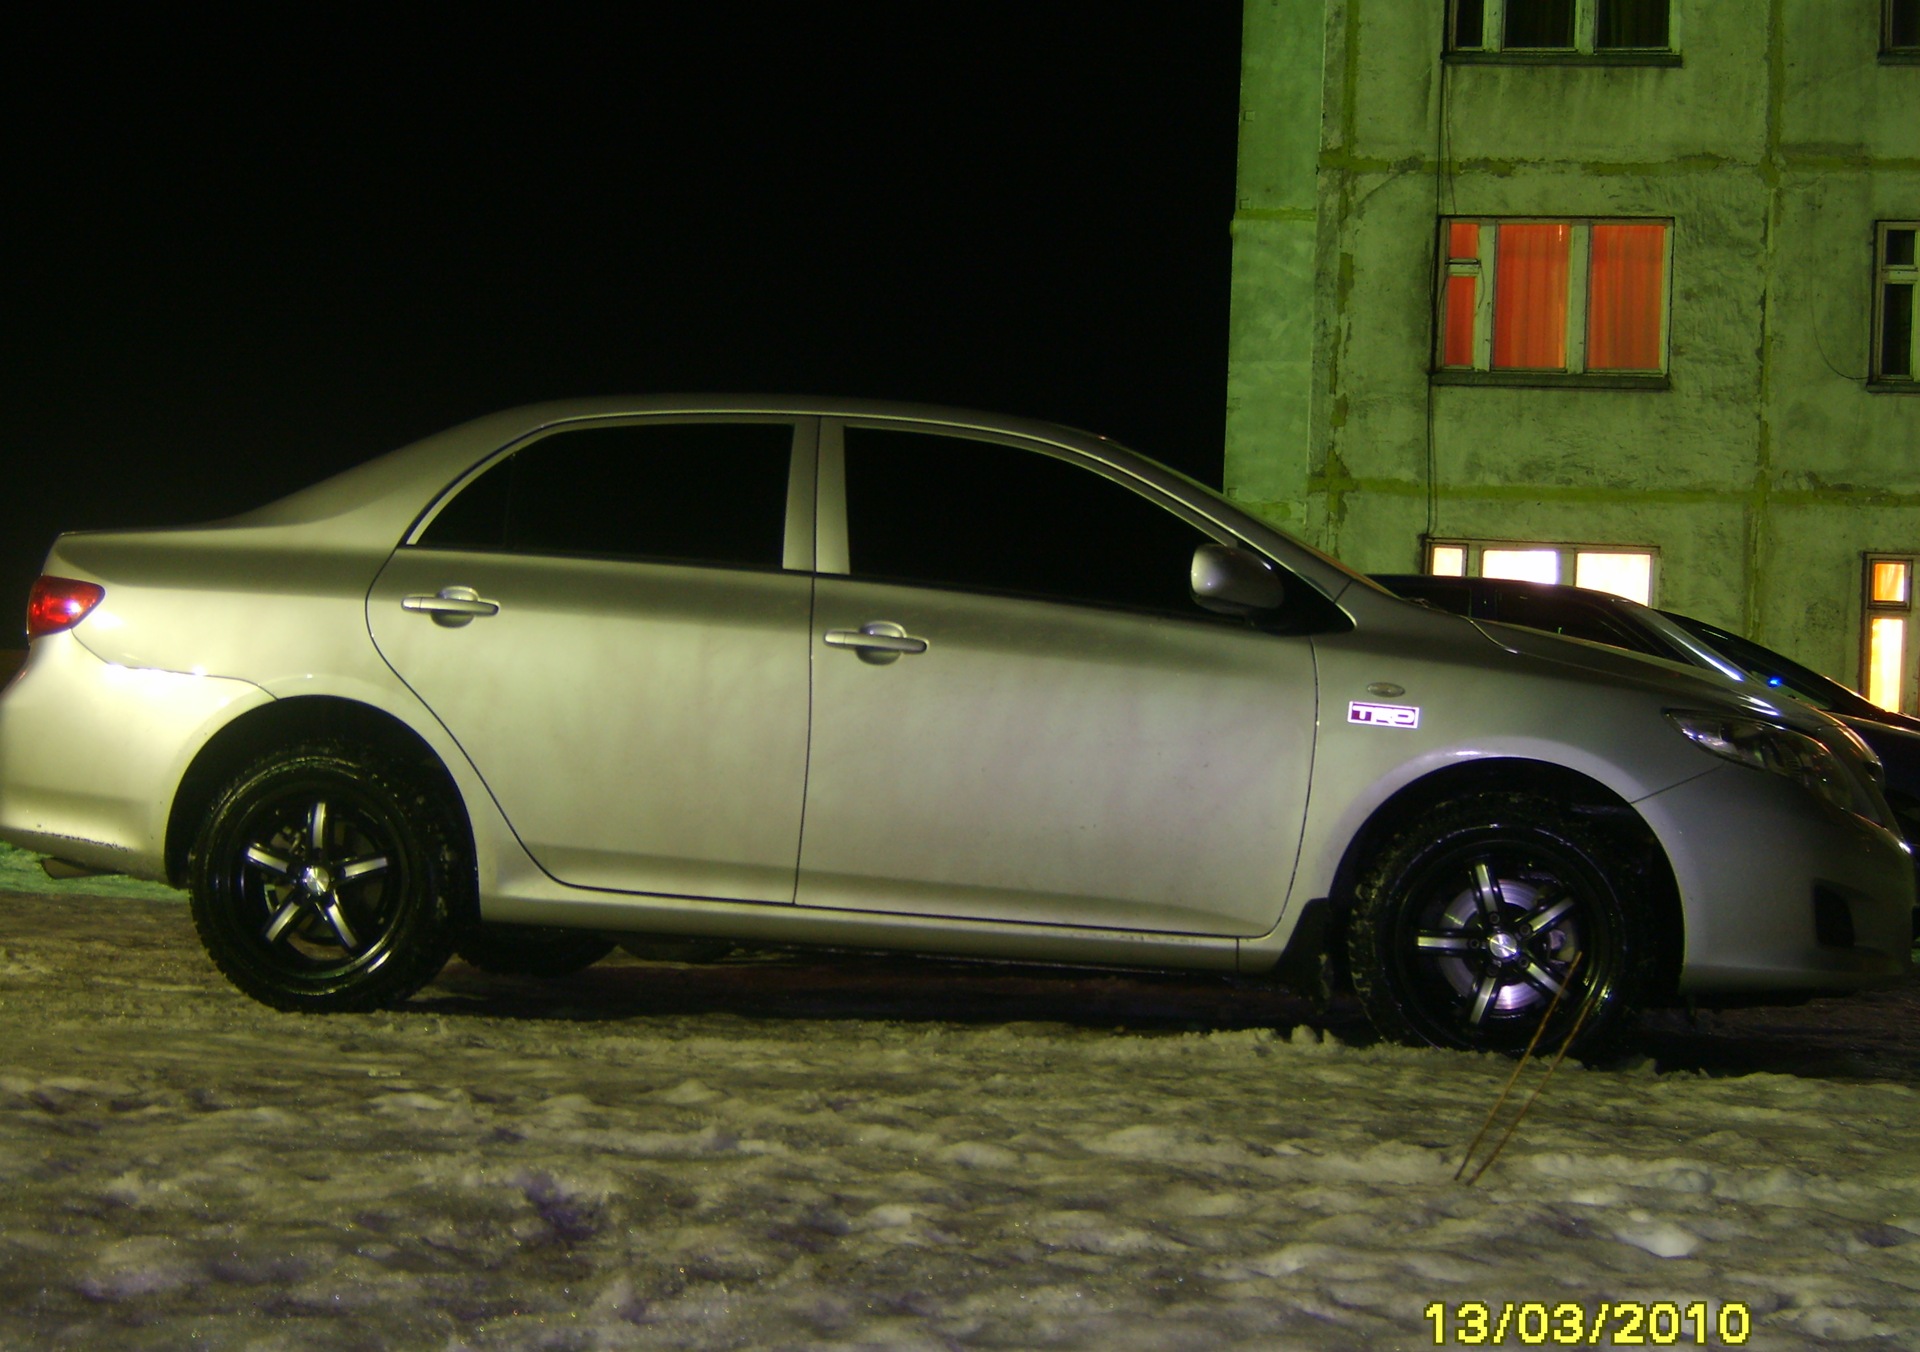 Tuning wheels - Toyota Corolla 14 L 2008